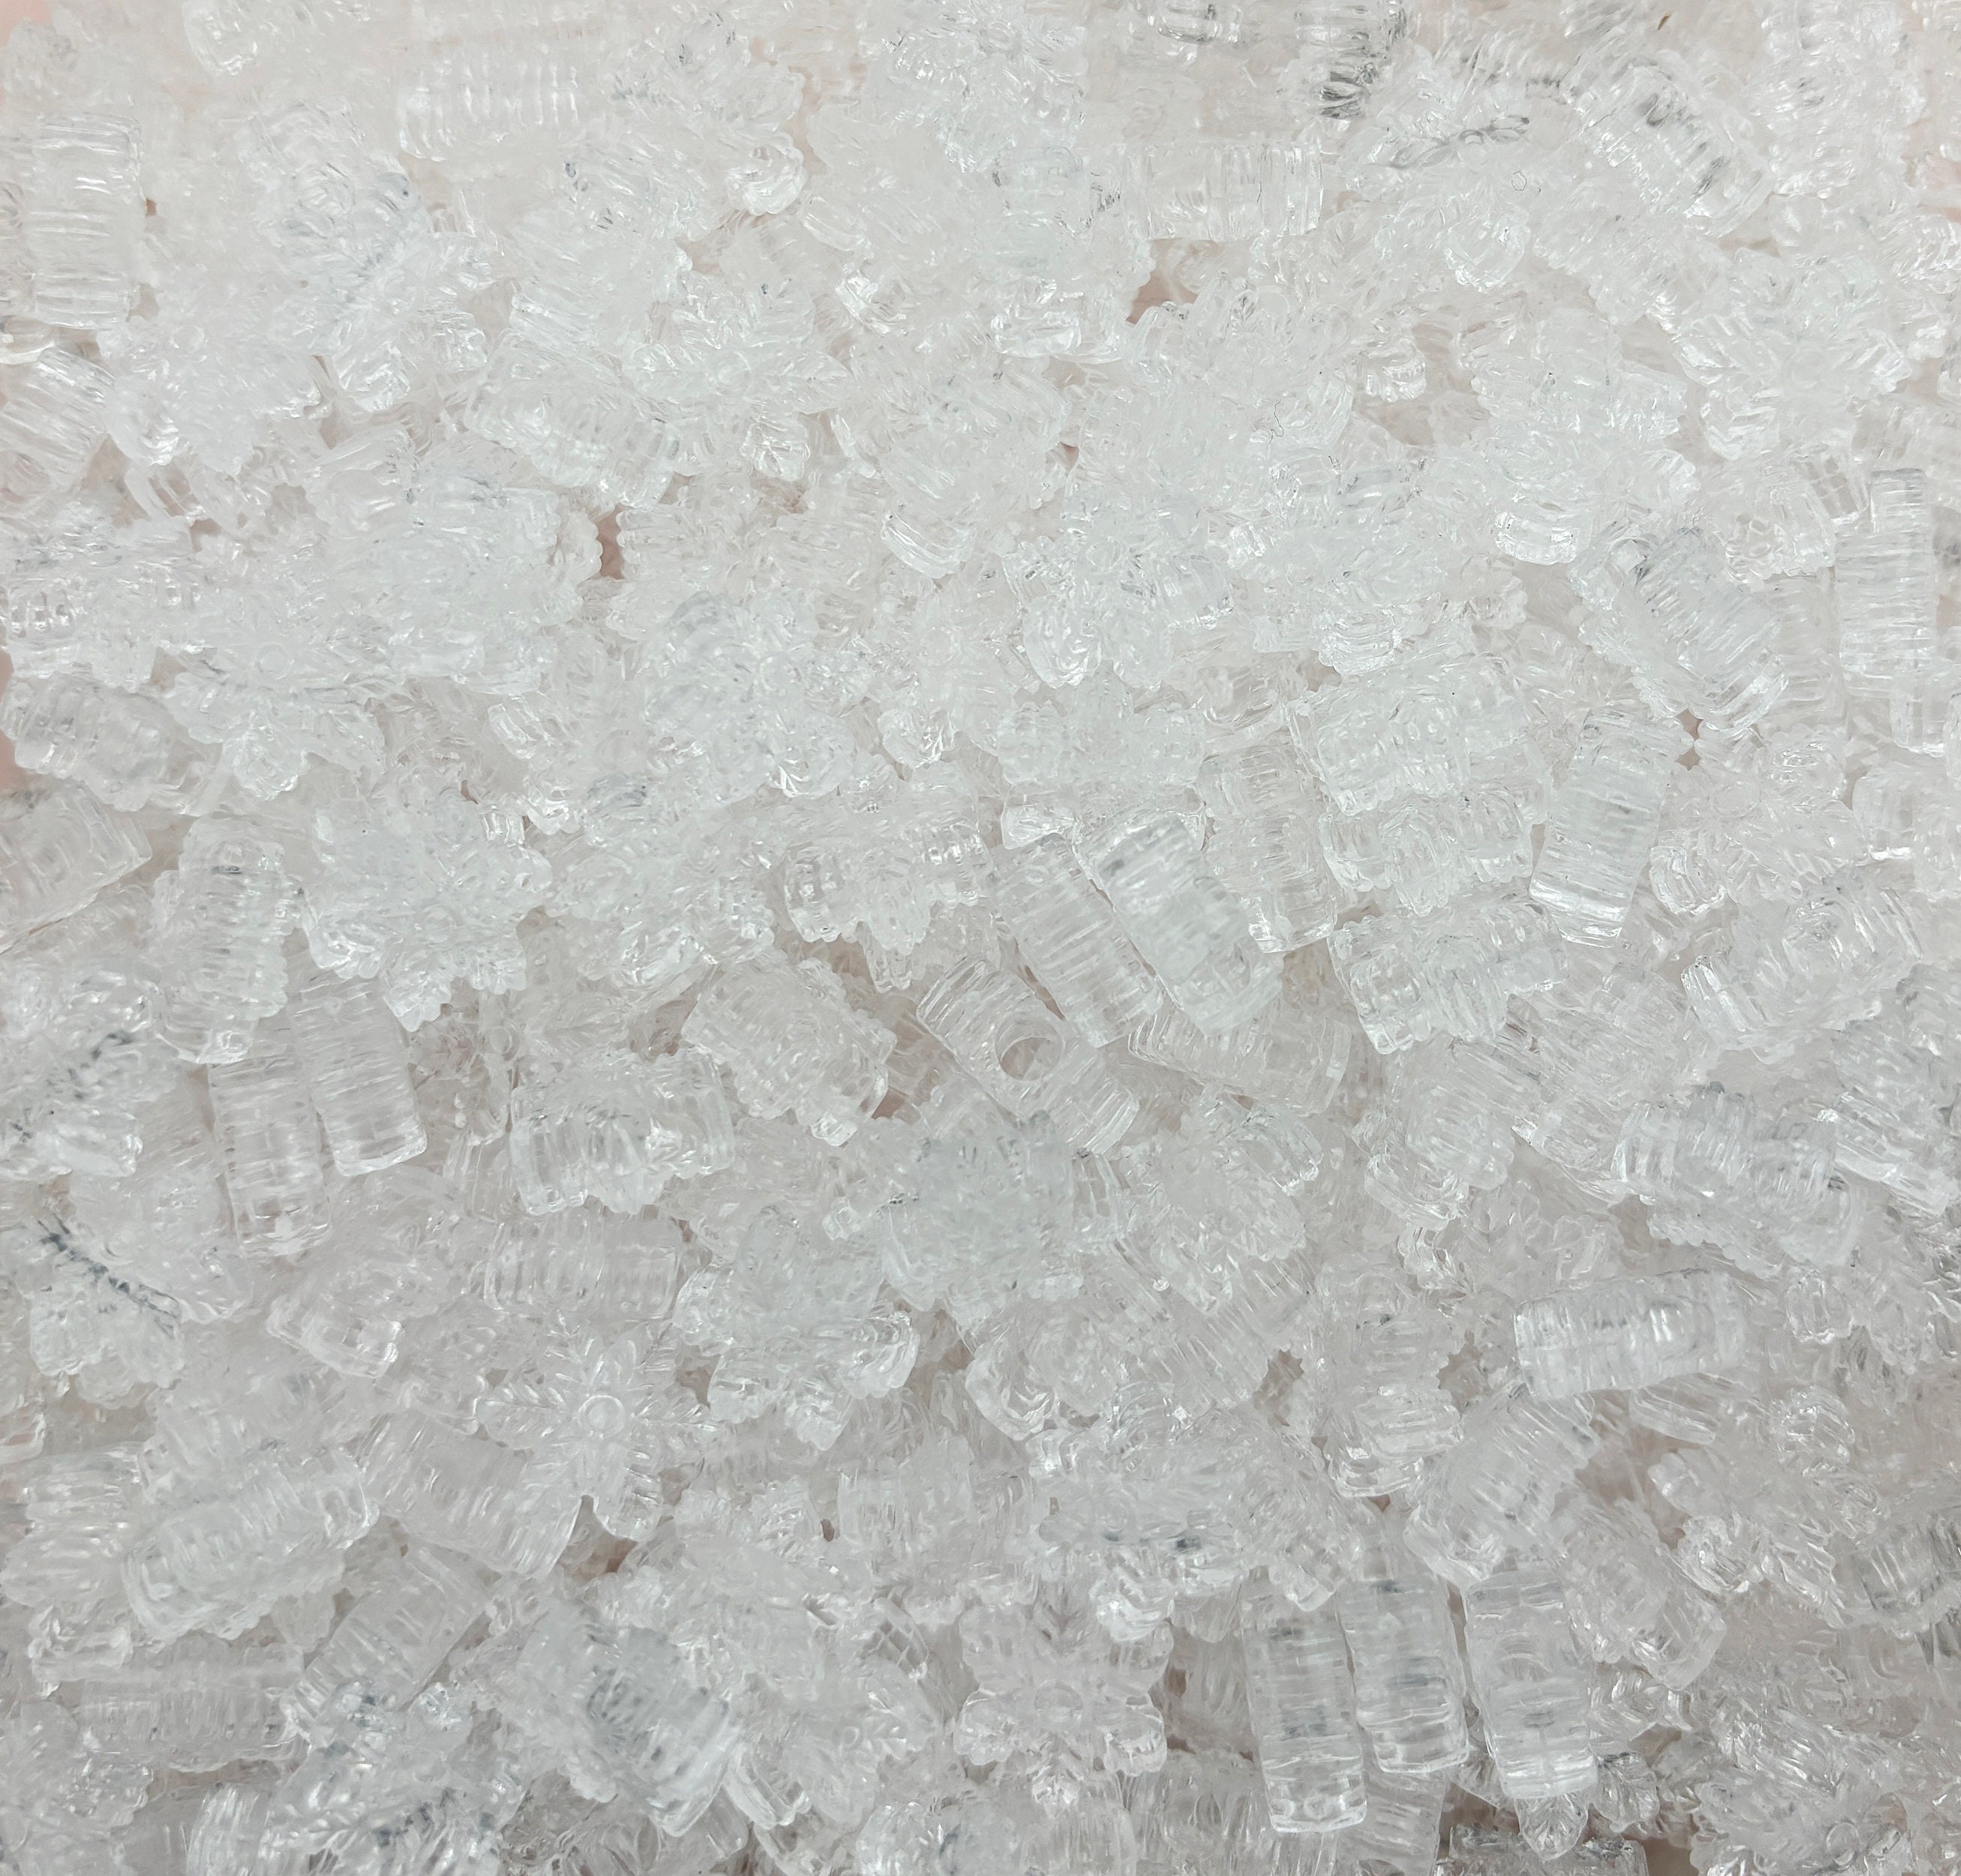 Crystal Clear Acrylic Snowflake